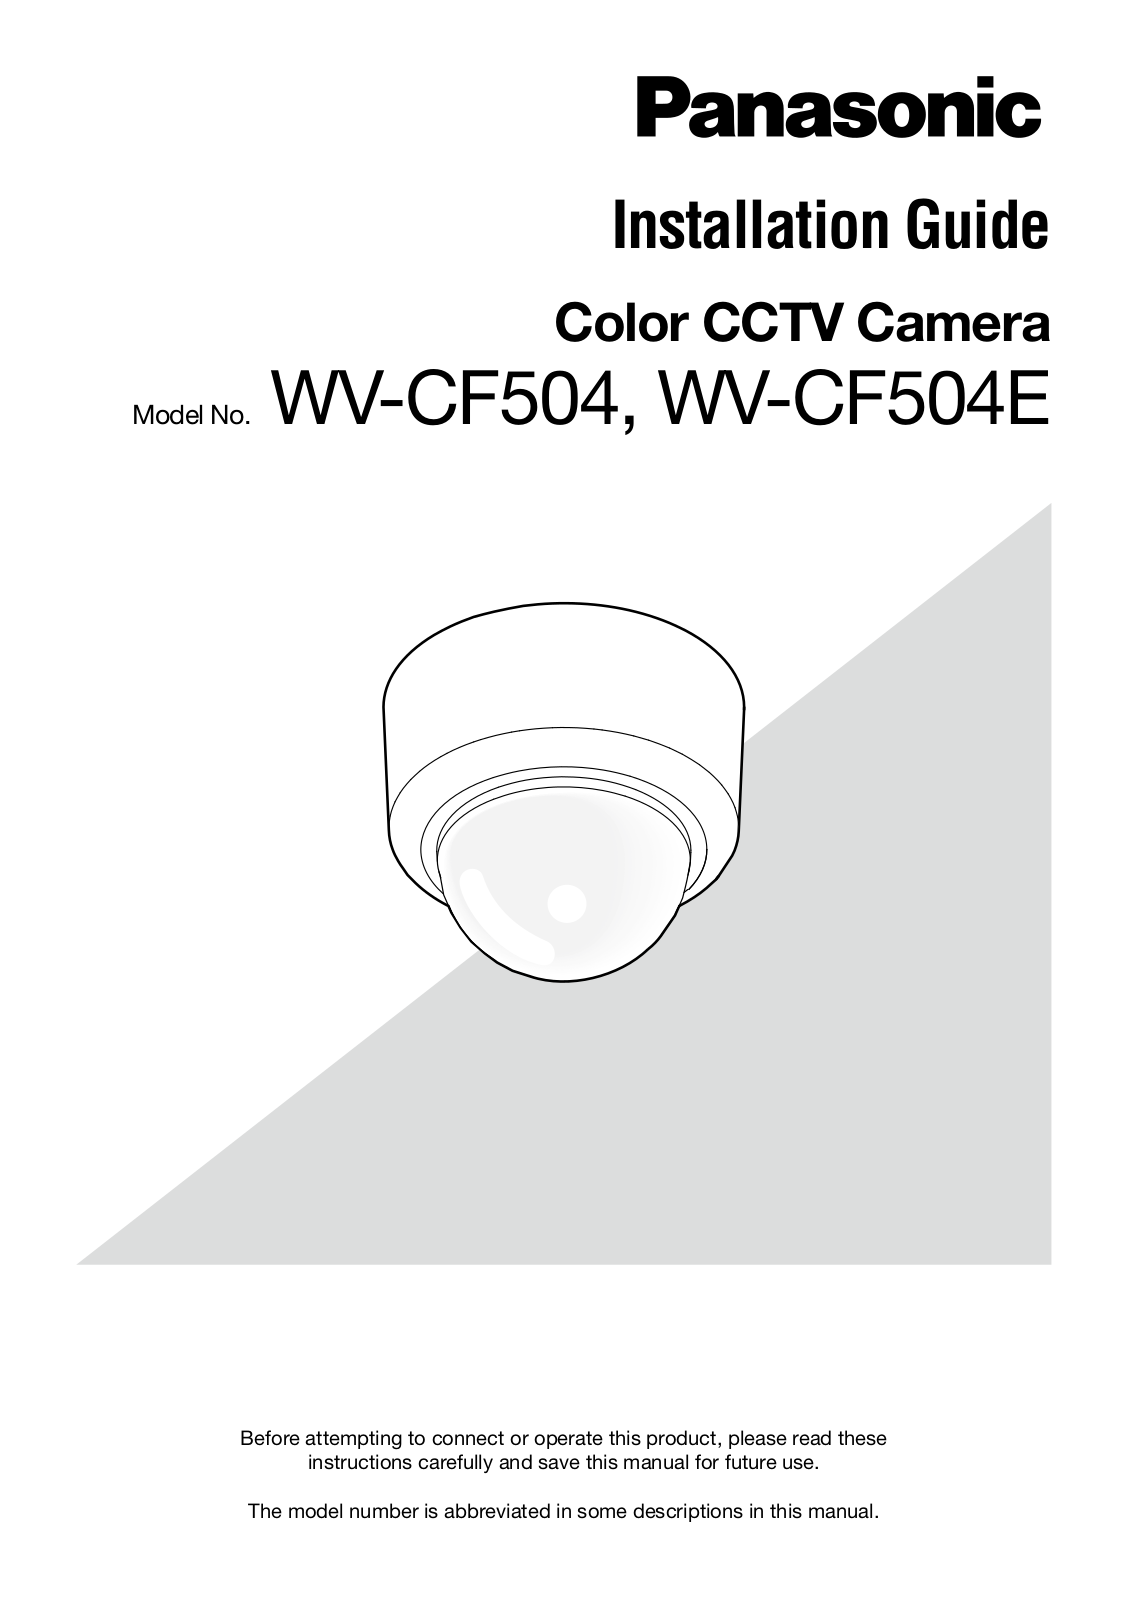 Panasonic WV-CF504 Installation Guide